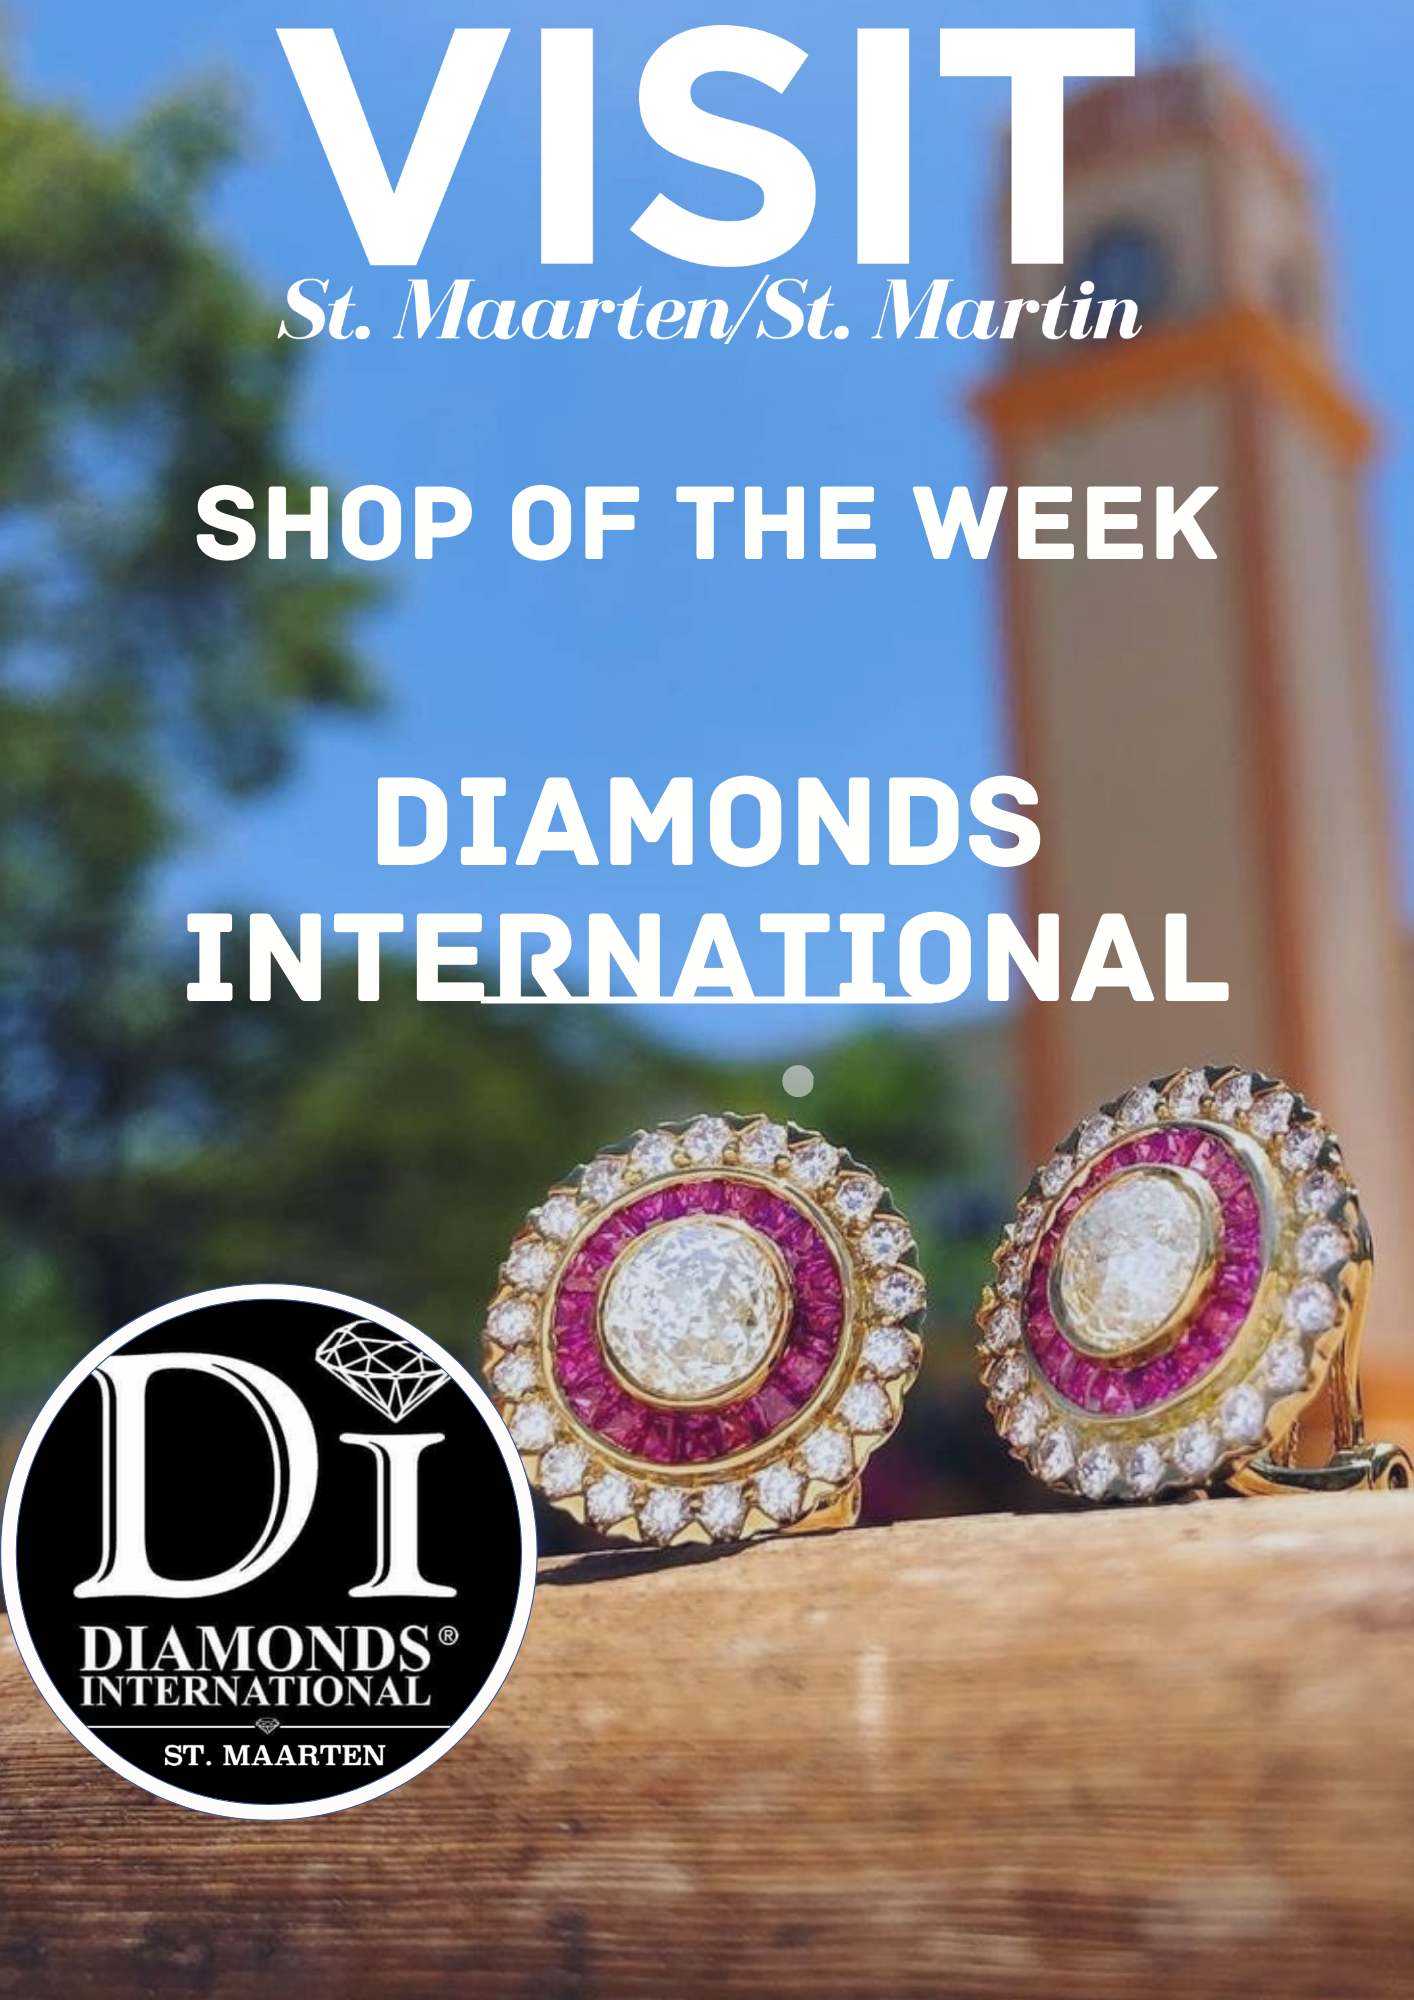 Diamonds International for shop of the week